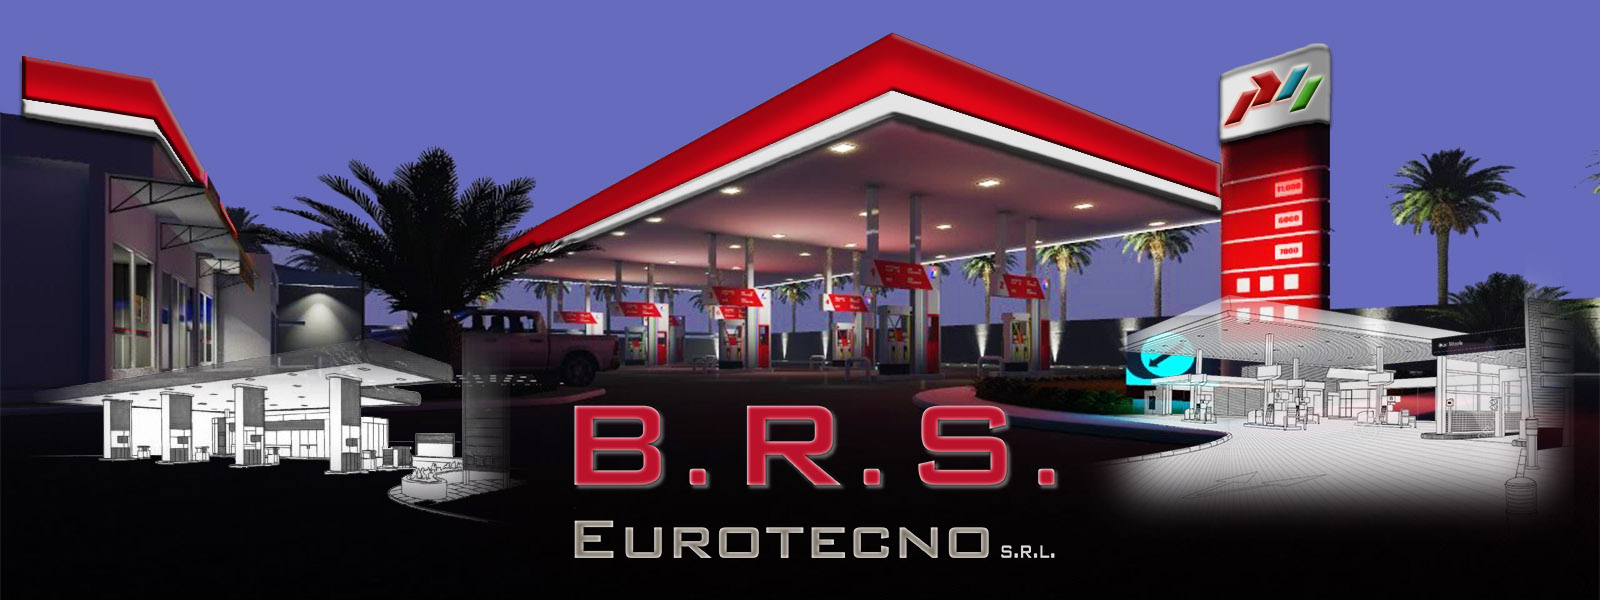 B.R.S. Eurotecno s.r.l. STATION